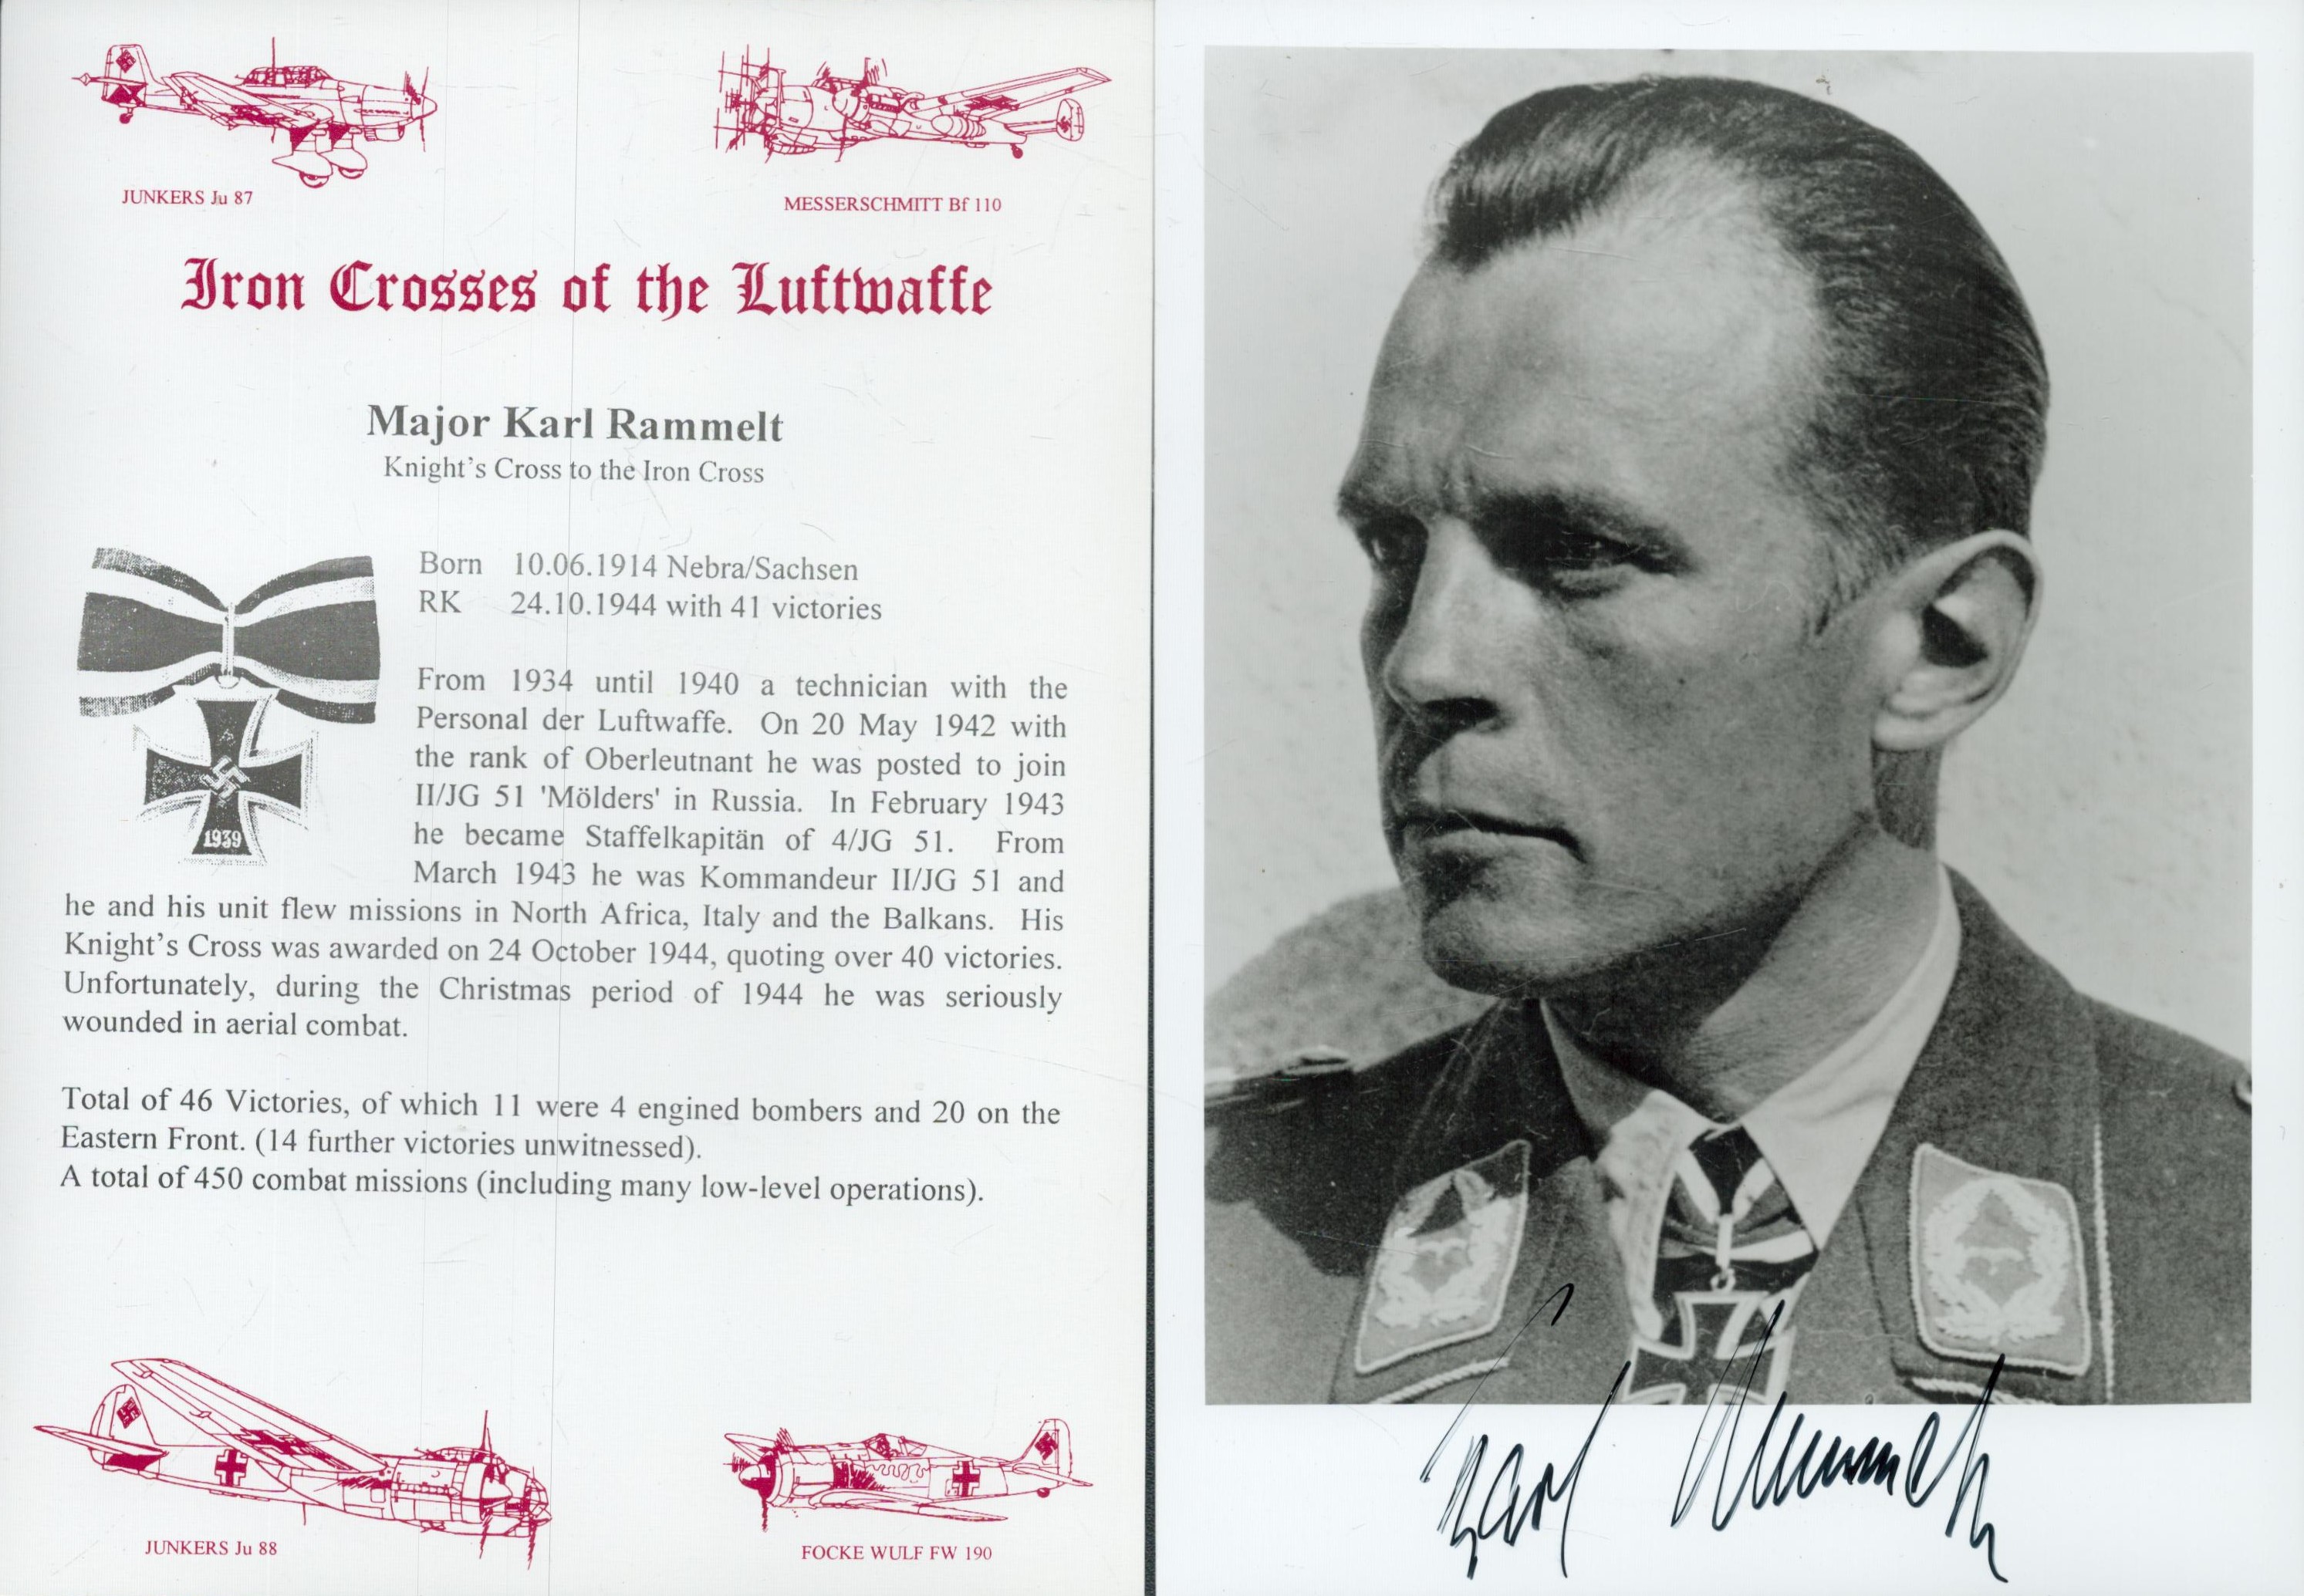 WW2 Luftwaffe fighter ace Mjr Karl Rammelt KC signed 7 x 5 inch b/w portrait photo along with a